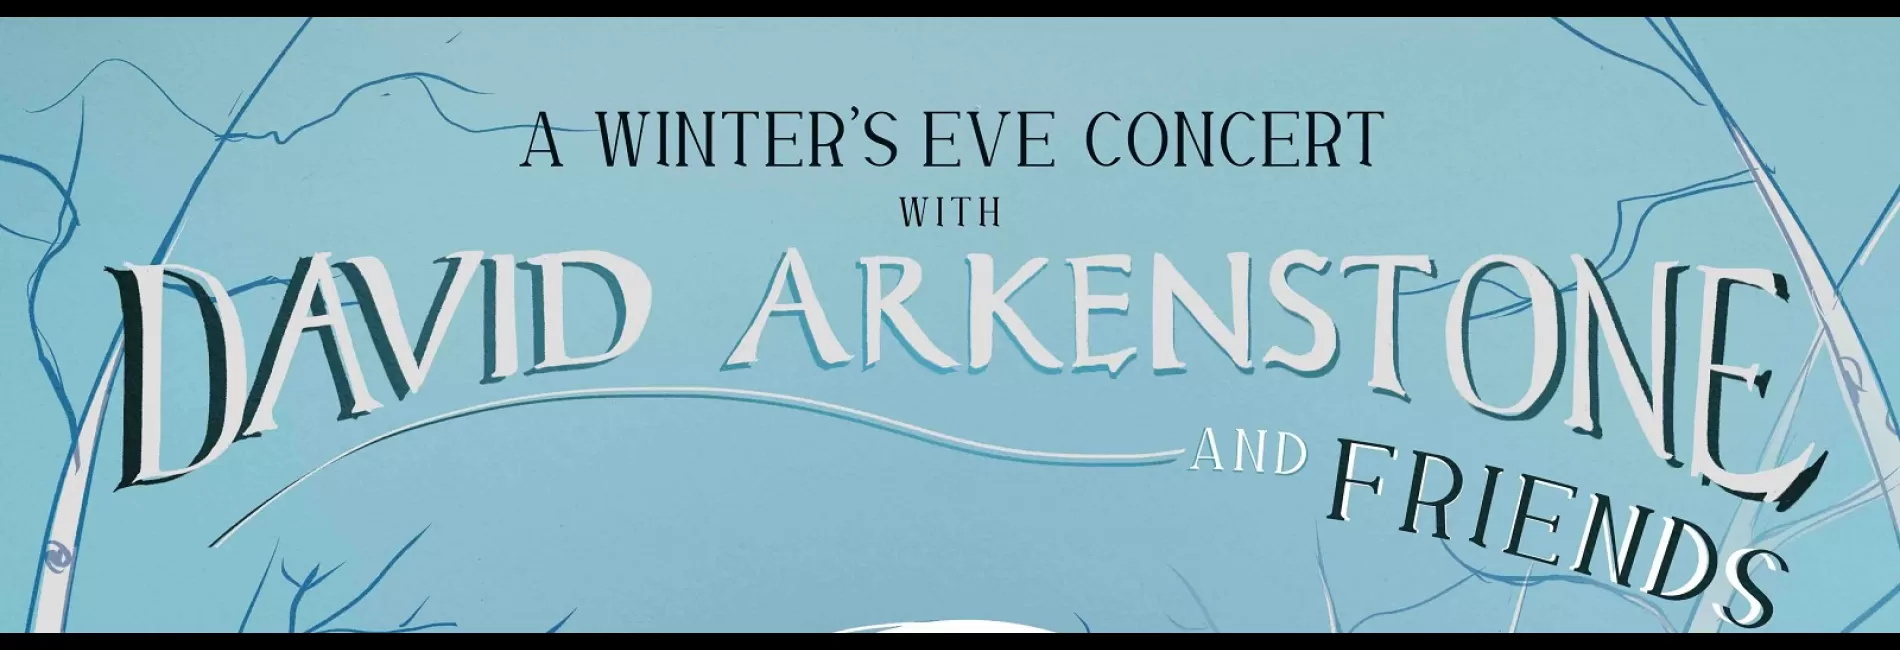 A Winter’s Eve Concert